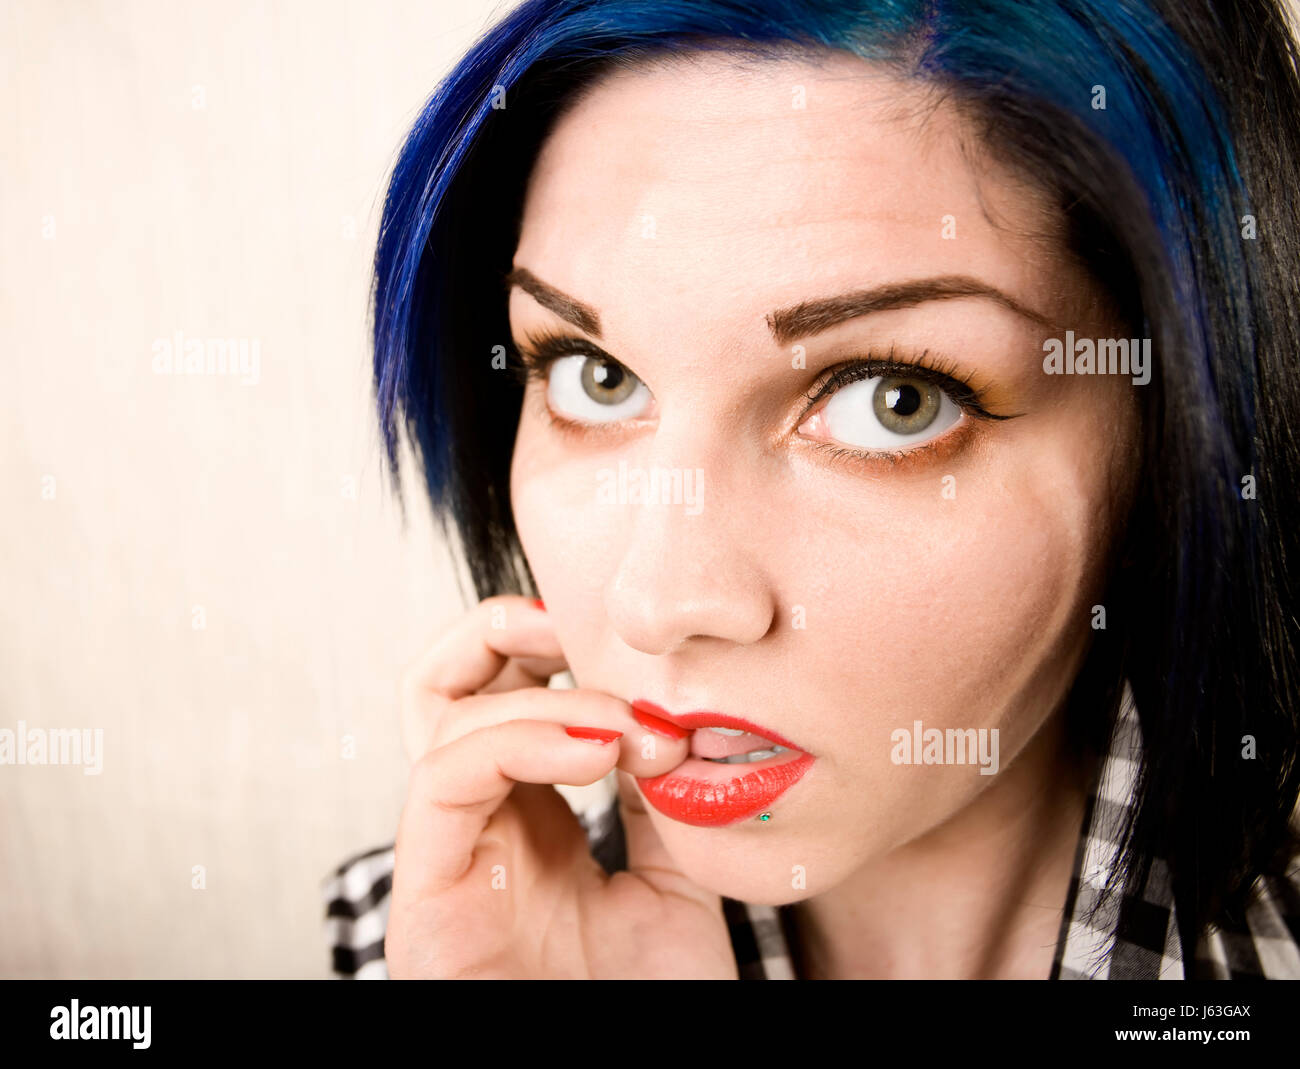 Gorgeous rockabilly girl in studio Stock Photo by ©Neshlv 149426644